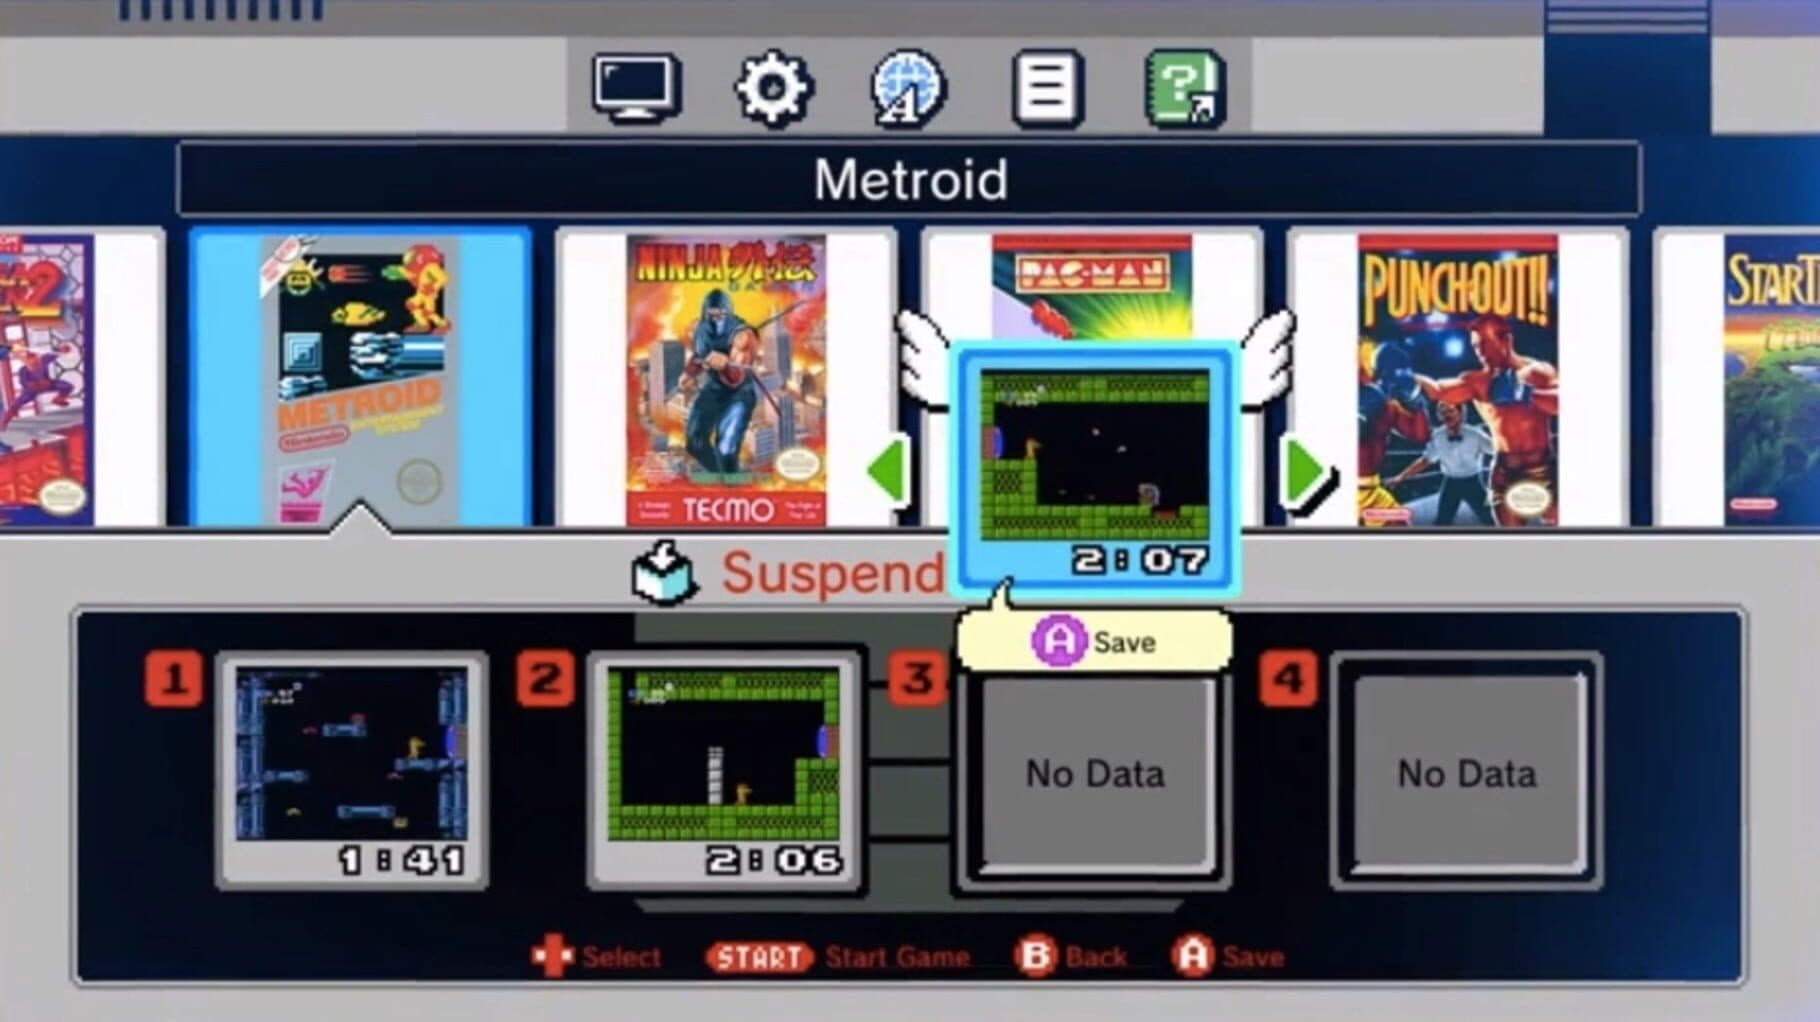 NES Classic Edition Image